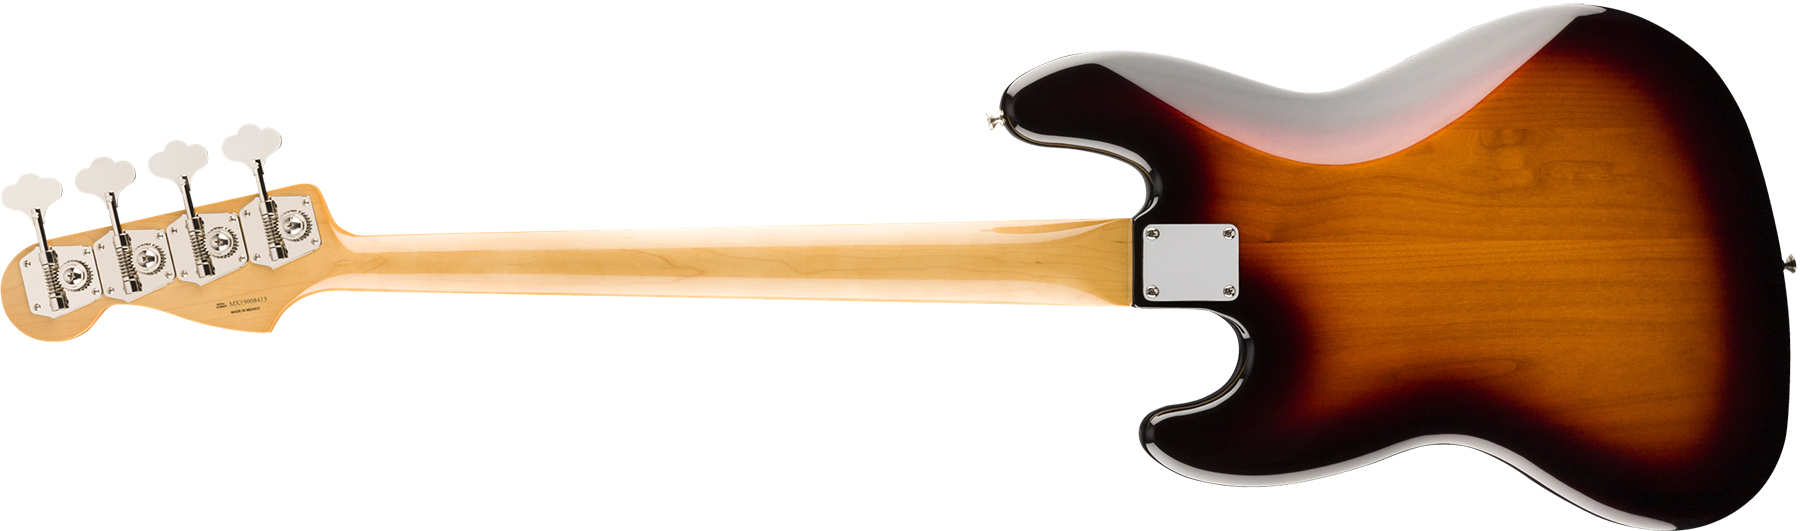 Fender Jazz Bass 60s Vintera Vintage Mex Pf - 3-color Sunburst - Basse Électrique Solid Body - Variation 1